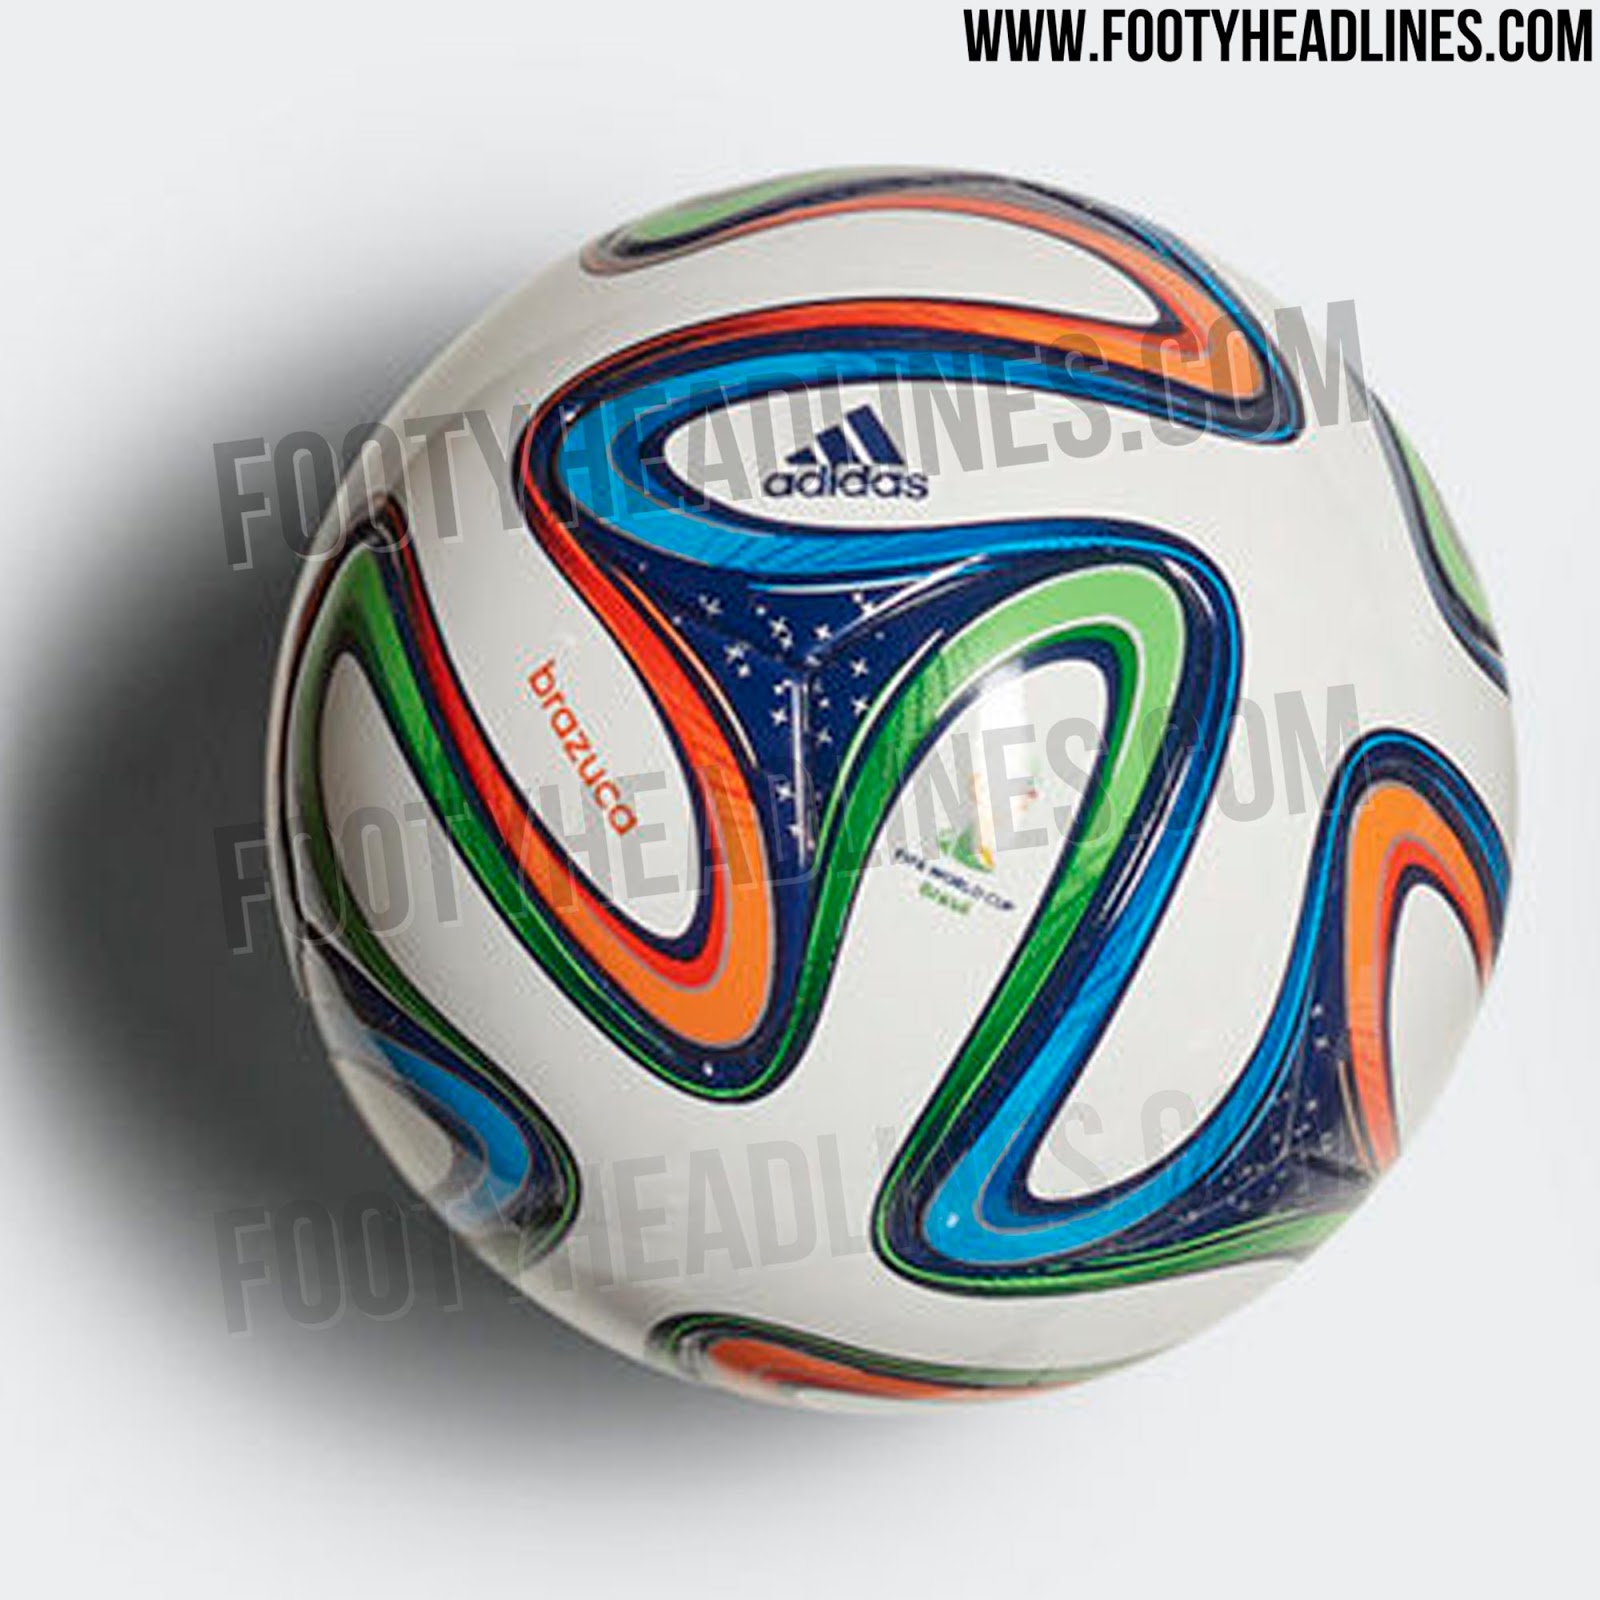 Adidas World Cup Historical Mini Ball Set 1970-2022 – Classic